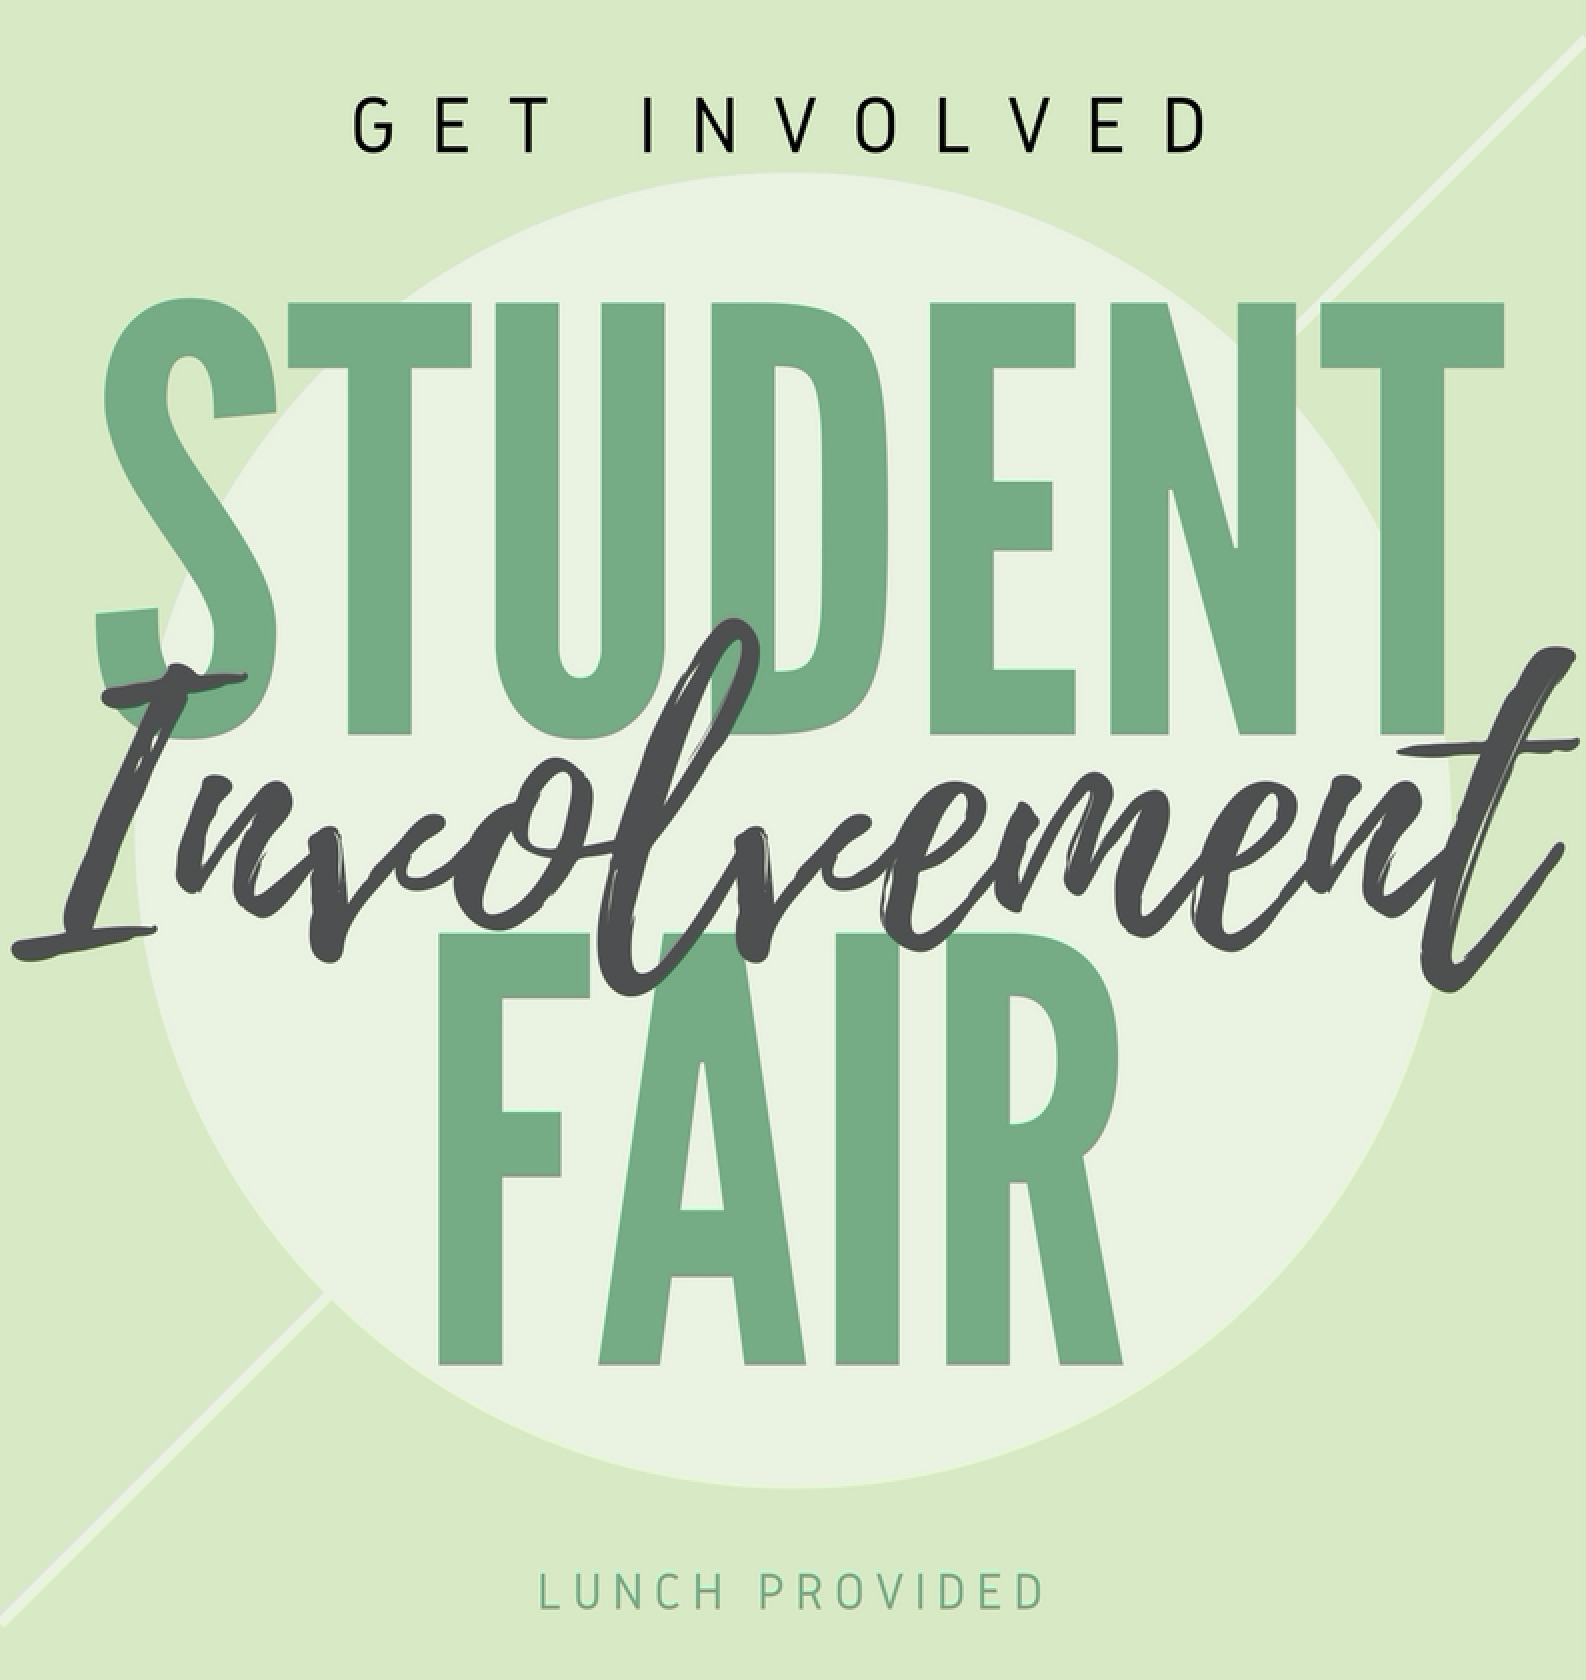 Student Involvement Fair